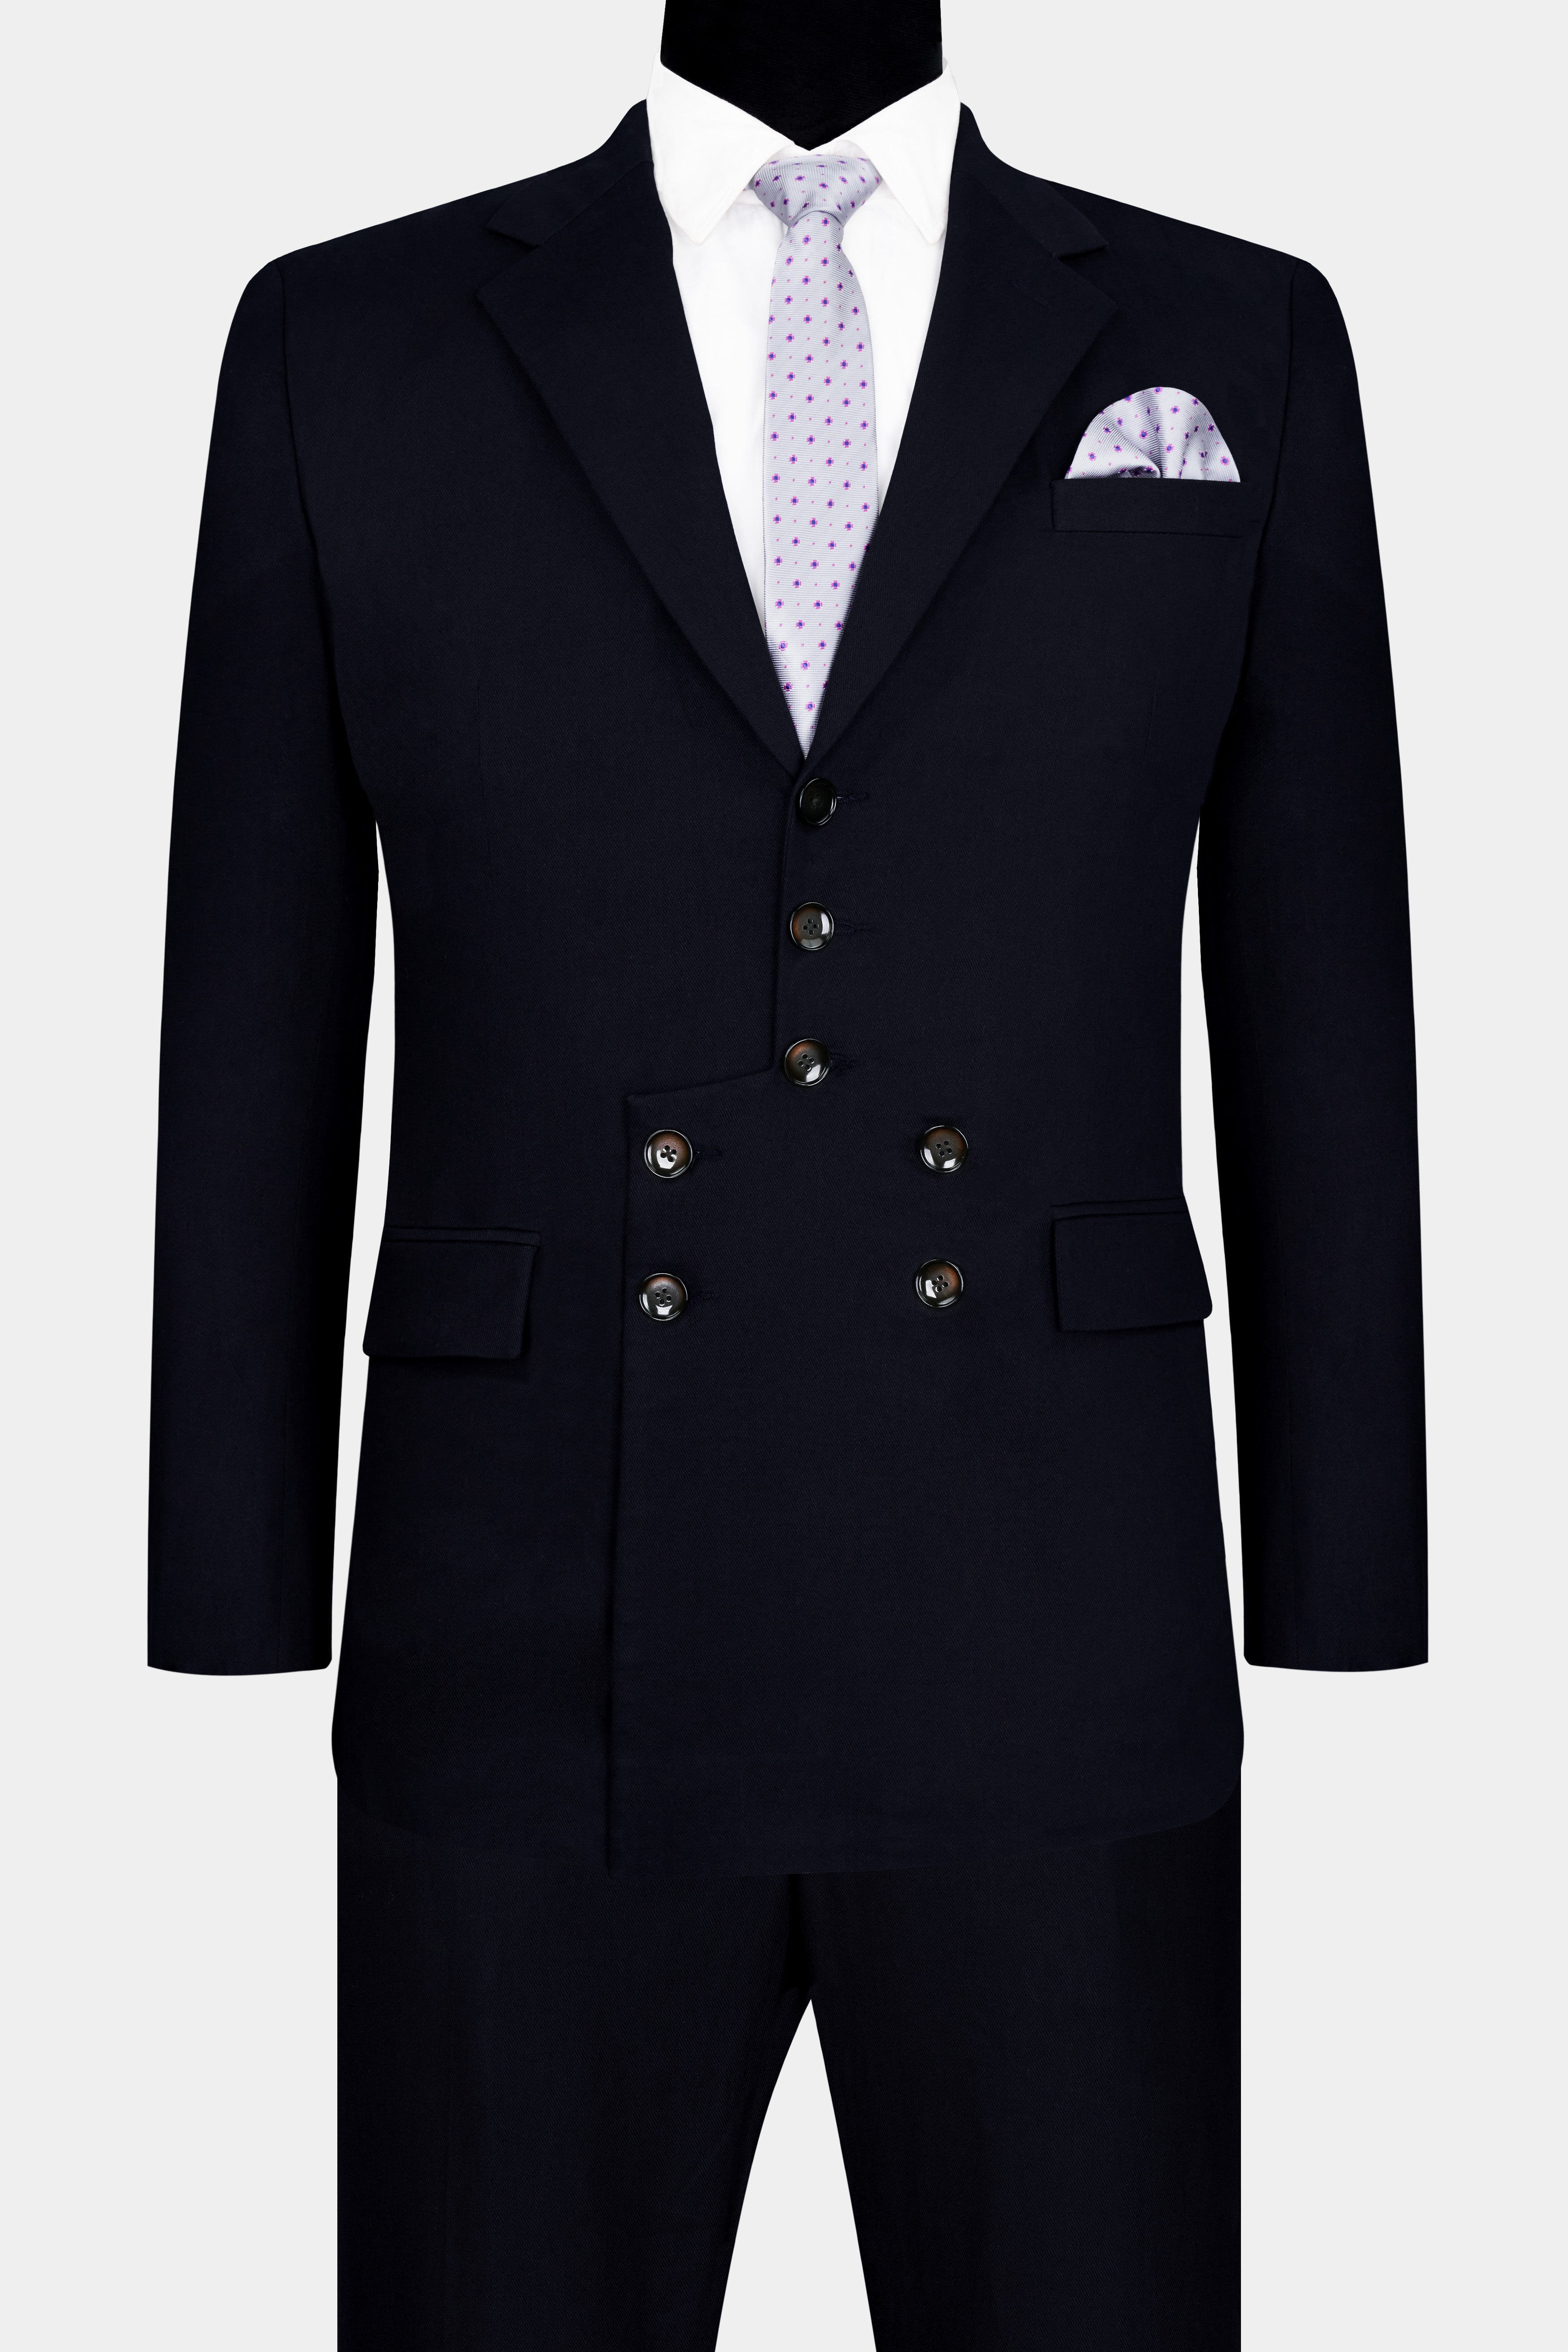 Buy Online Designer Suits For Men at French Crown